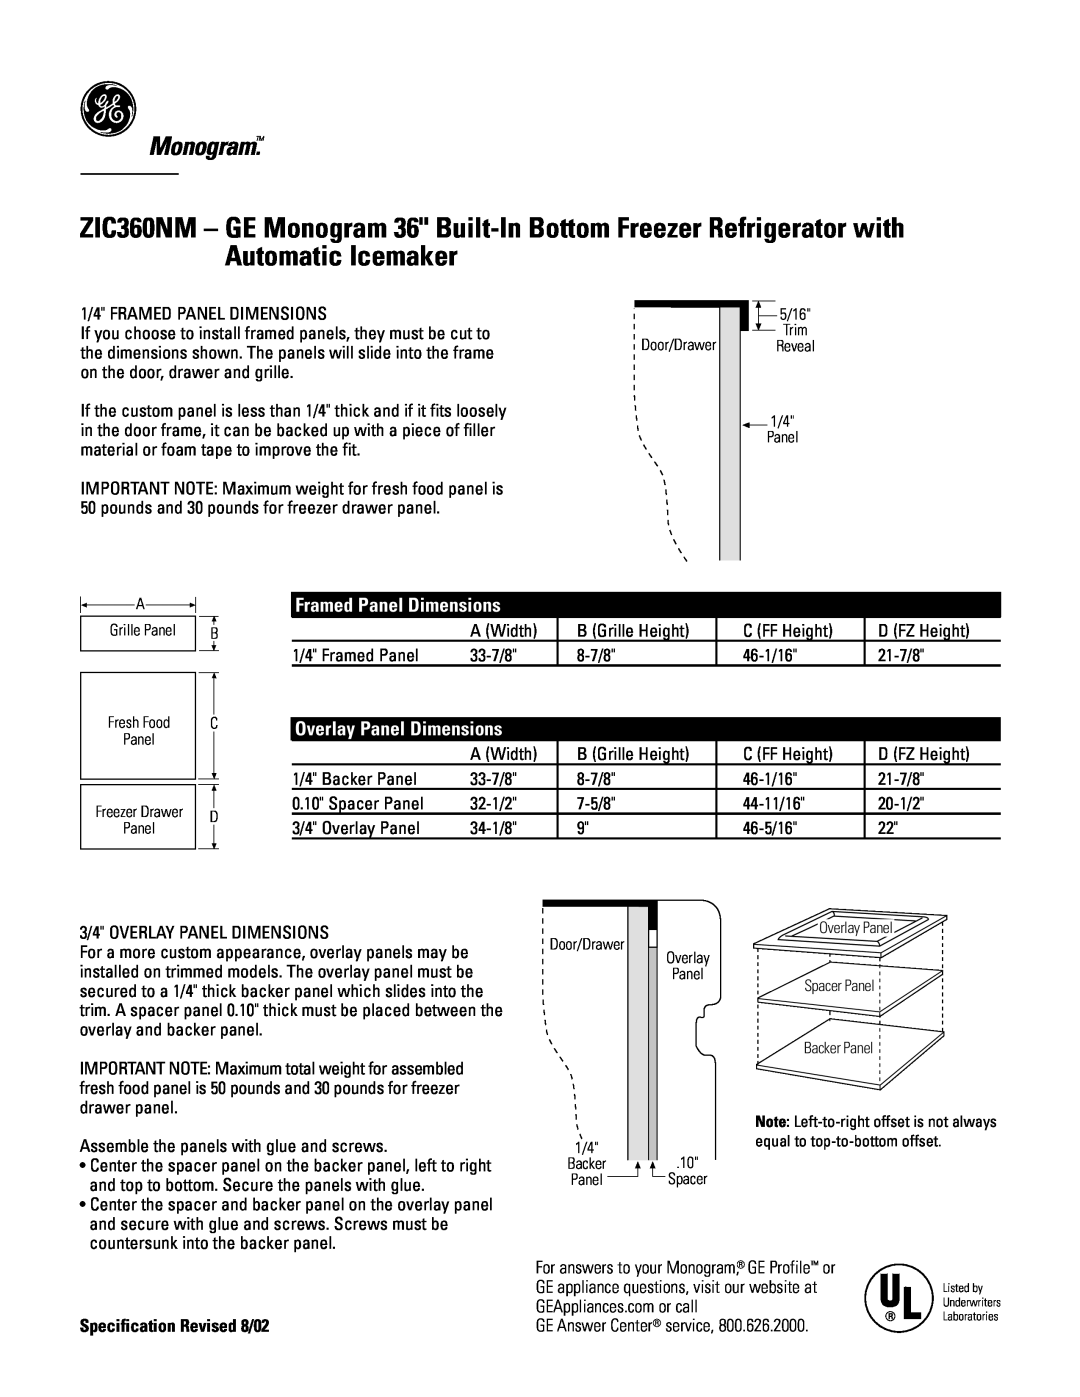 GE Monogram ZIC360NM Monogram, Framed Panel Dimensions, Overlay Panel Dimensions, Specification Revised 8/02, Door/Drawer 